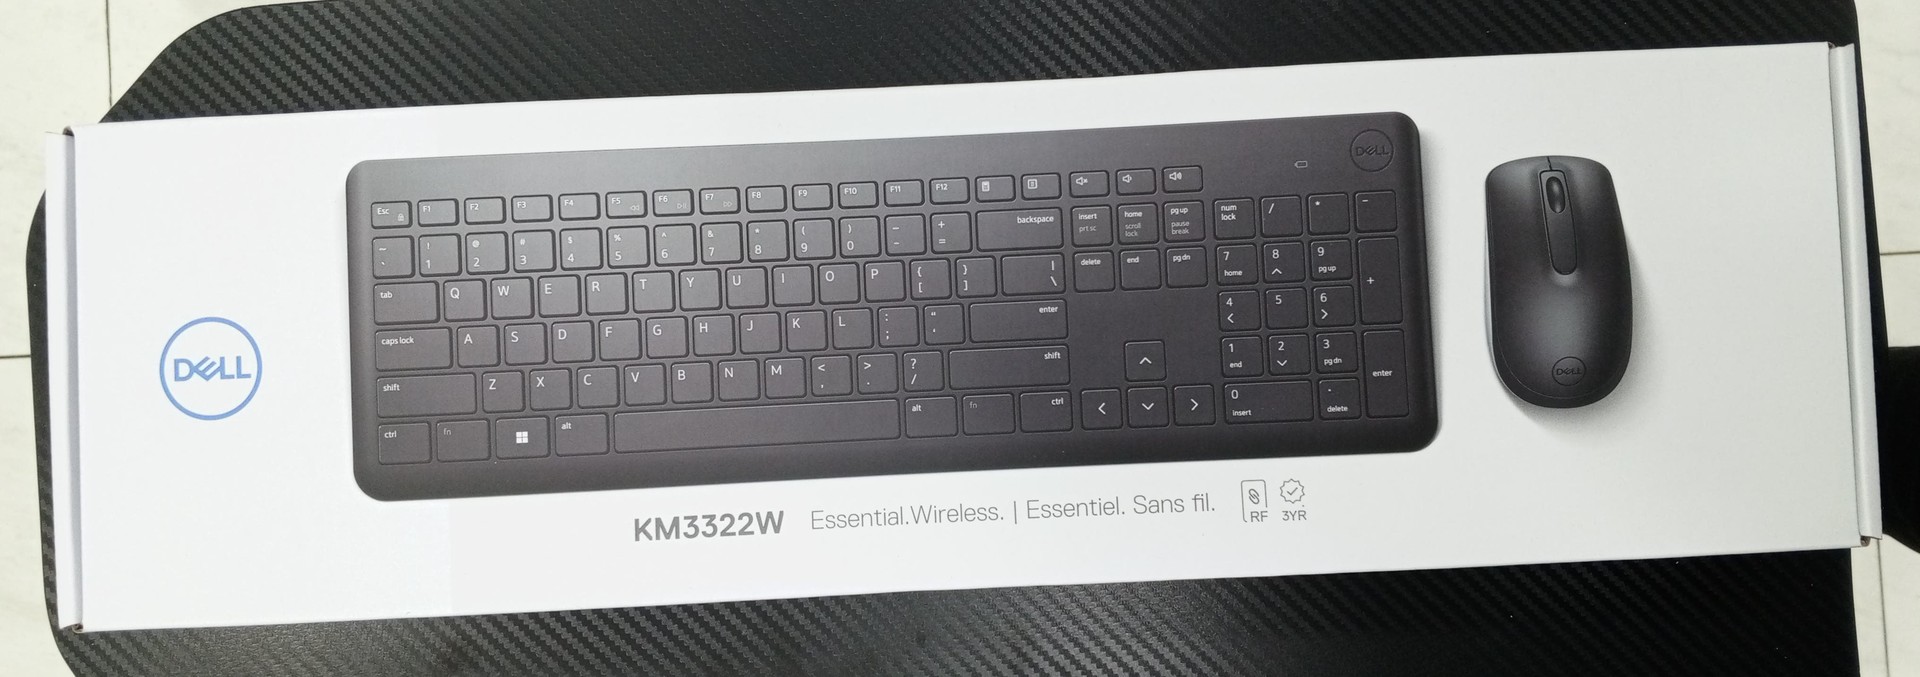 computadoras y laptops - Teclado Dell Wireless Keyboard and Mouse - KM3322W
 0